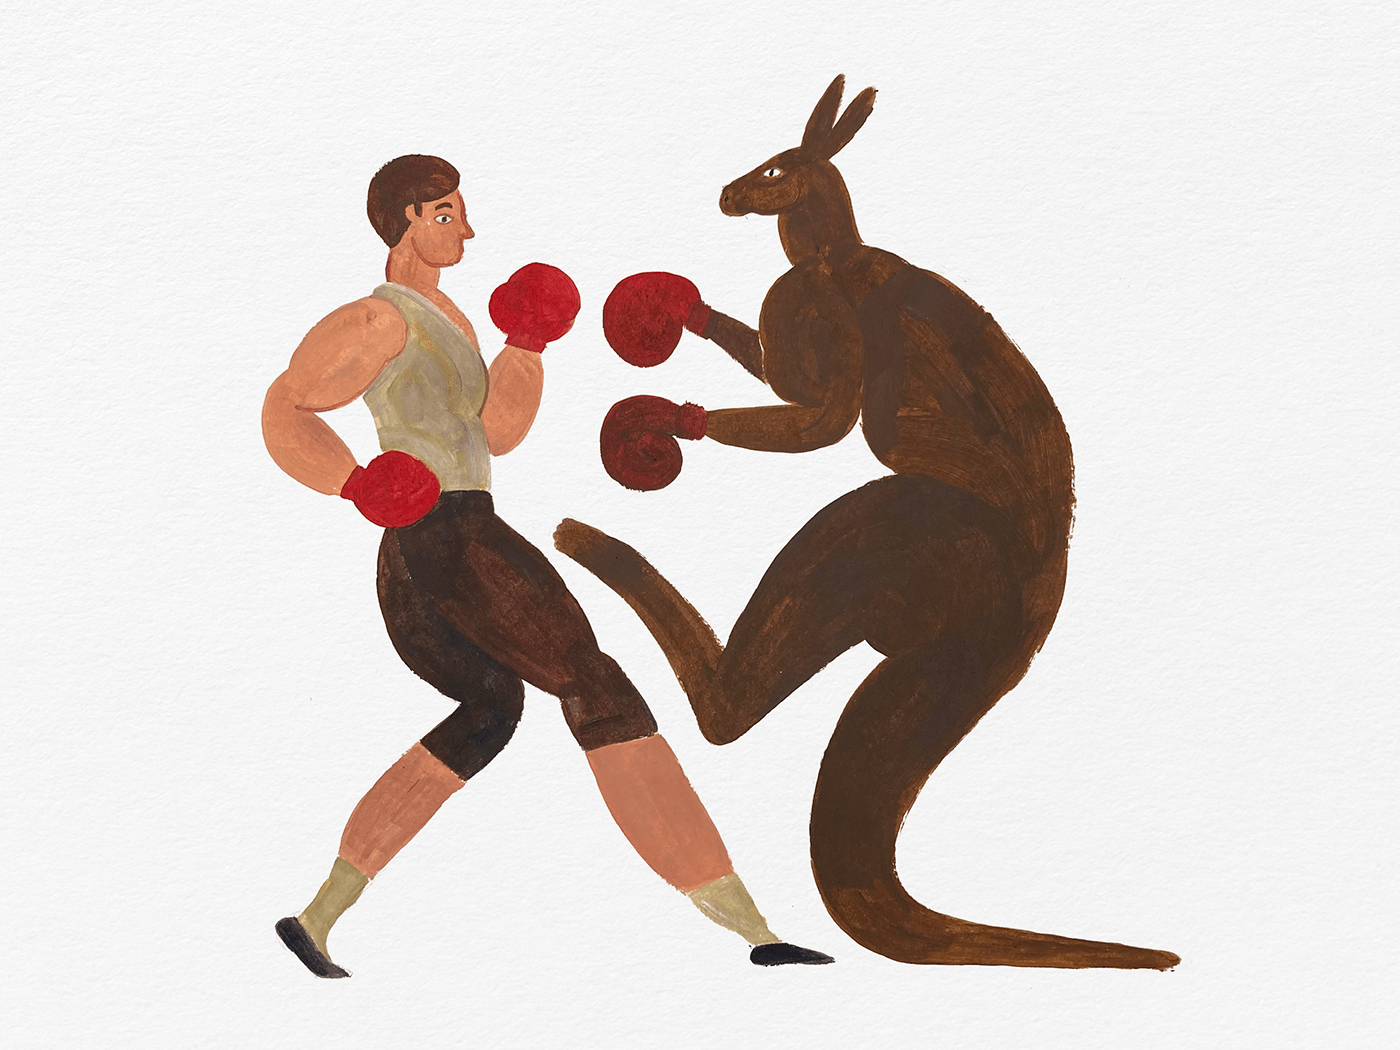 Illustration of a human and a kangaroo having a boxing match.